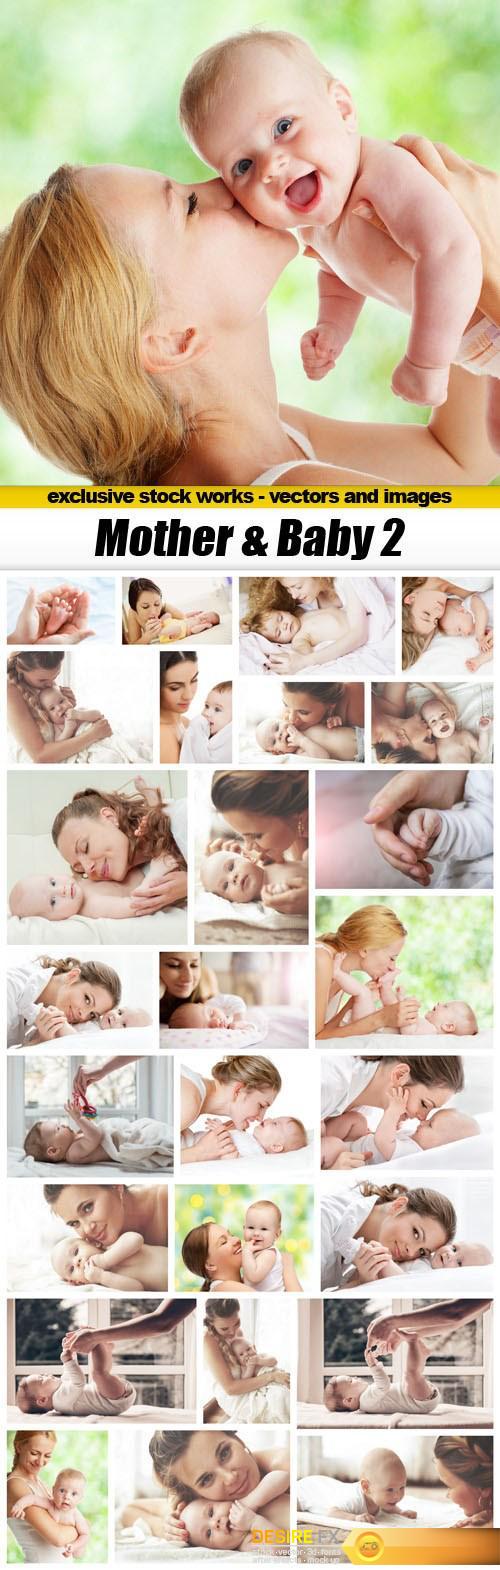 Mother & Baby 2 - 27xUHQ JPEG